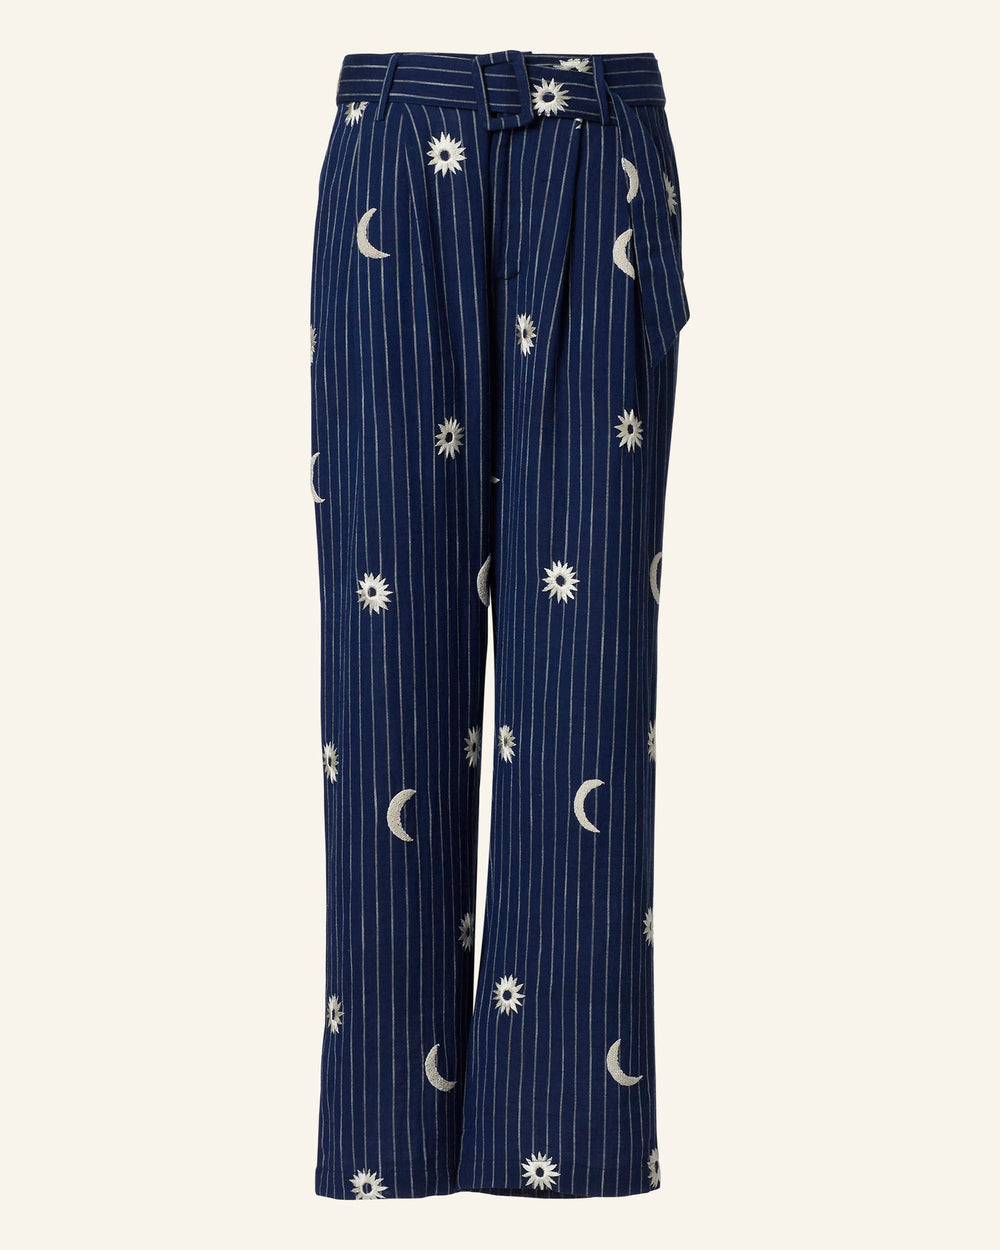 Colette Luna Stripe Pant